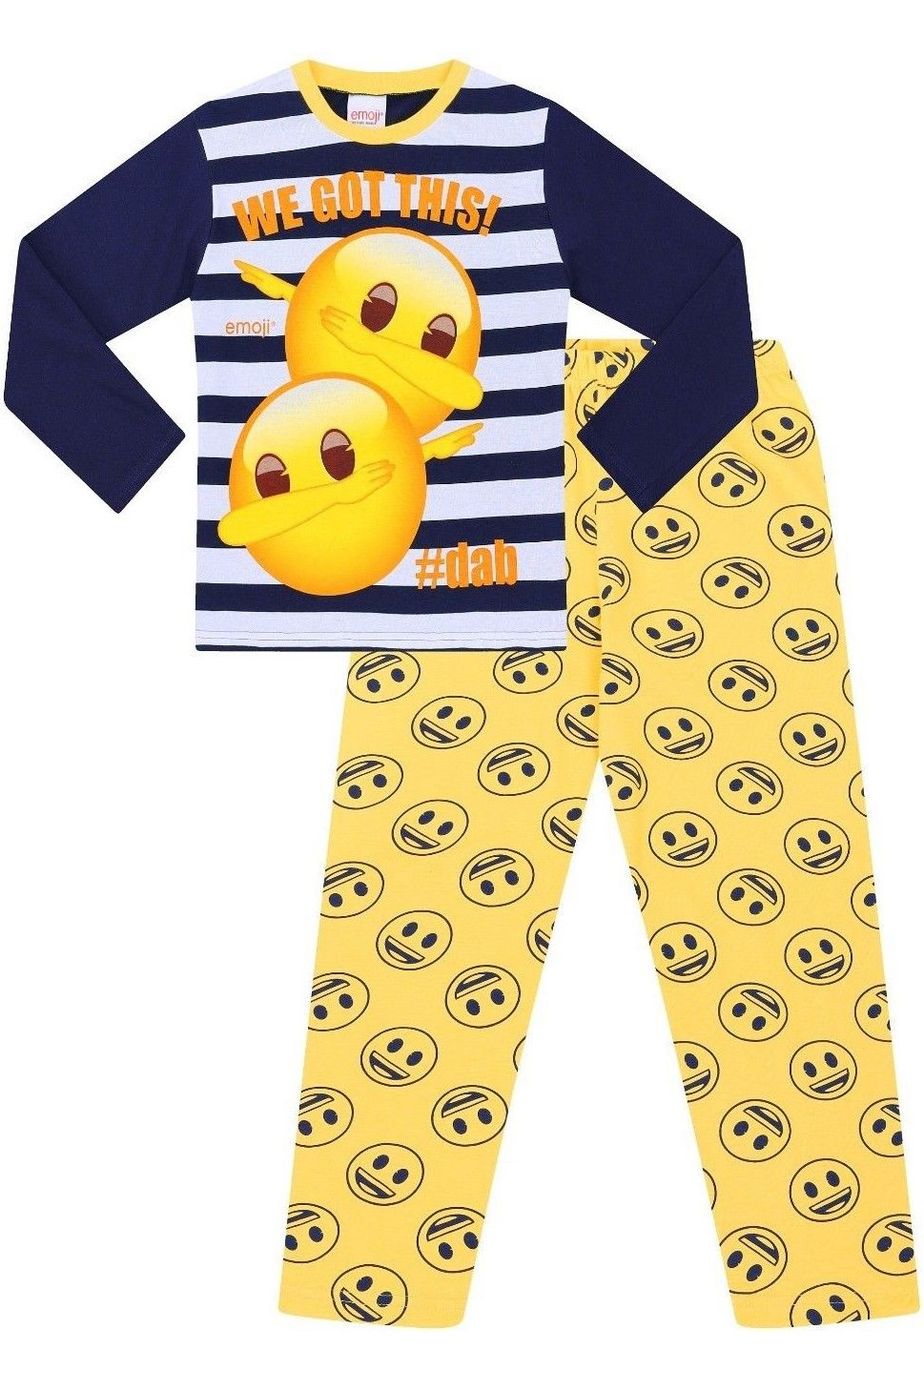 We Got This Emoji #Dab Long Pyjamas